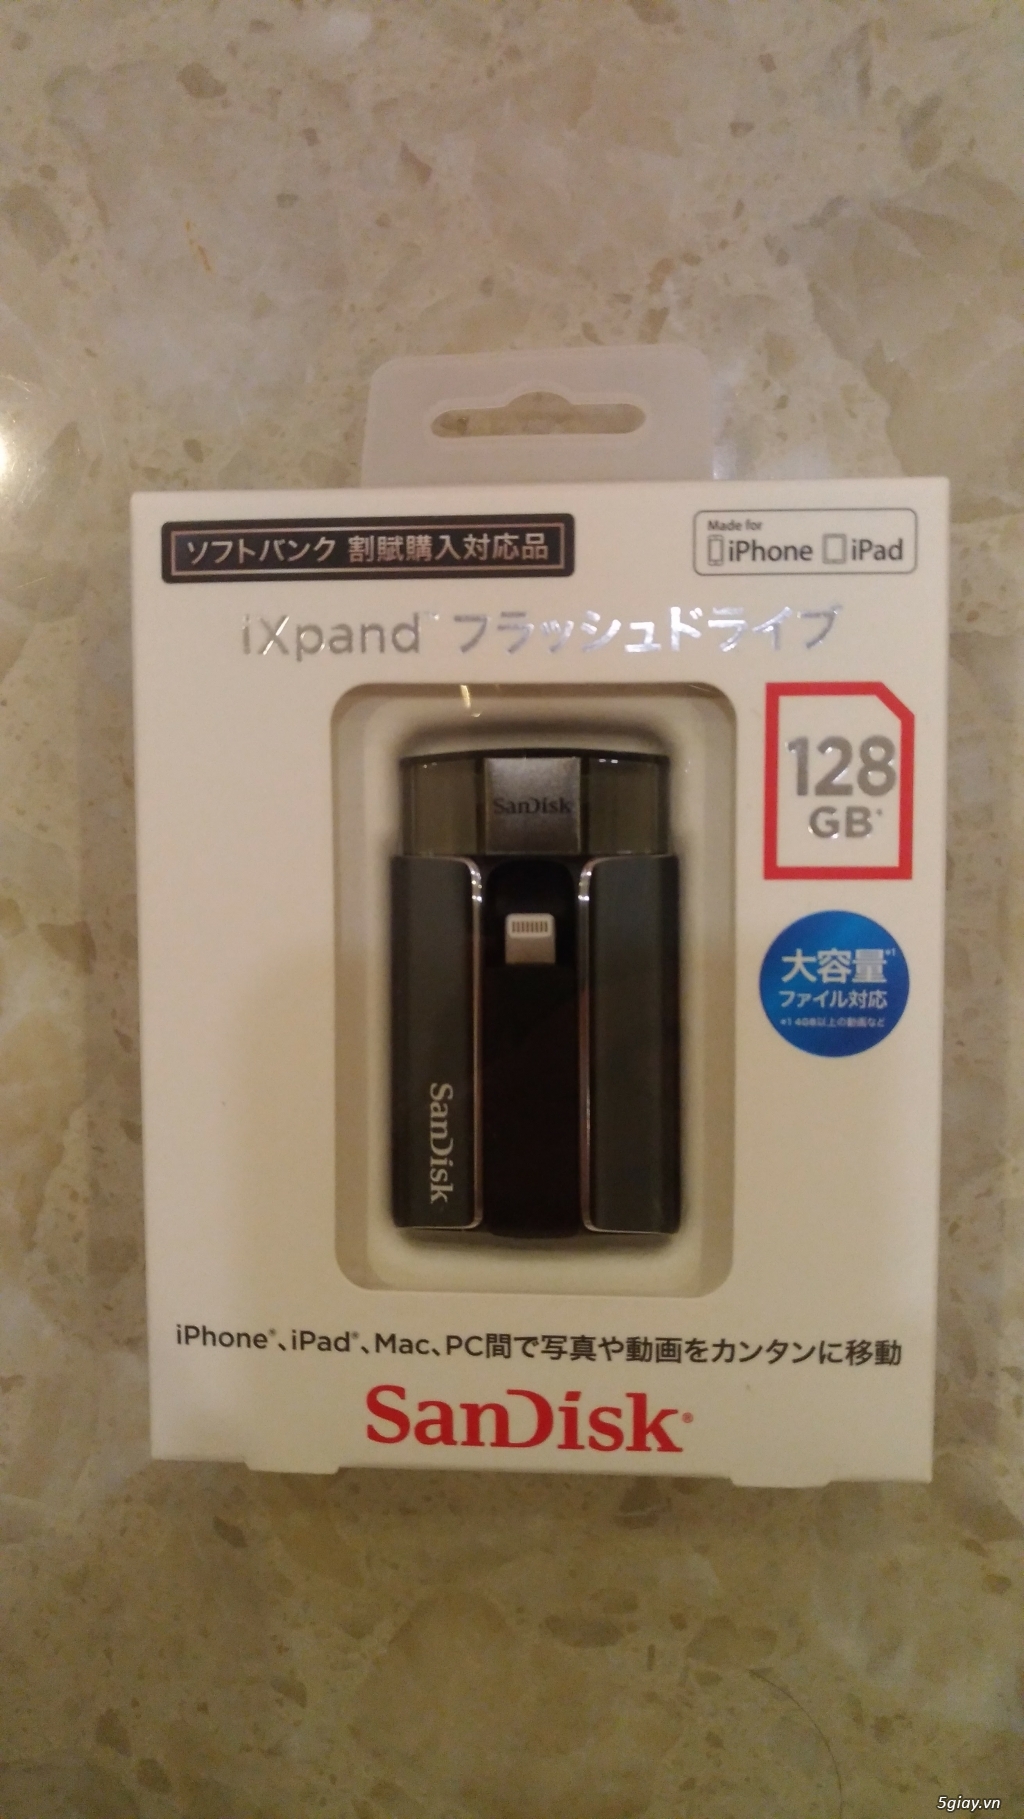 USB SanDisk iXpand cho iPhone iPad PC 128GB - 1